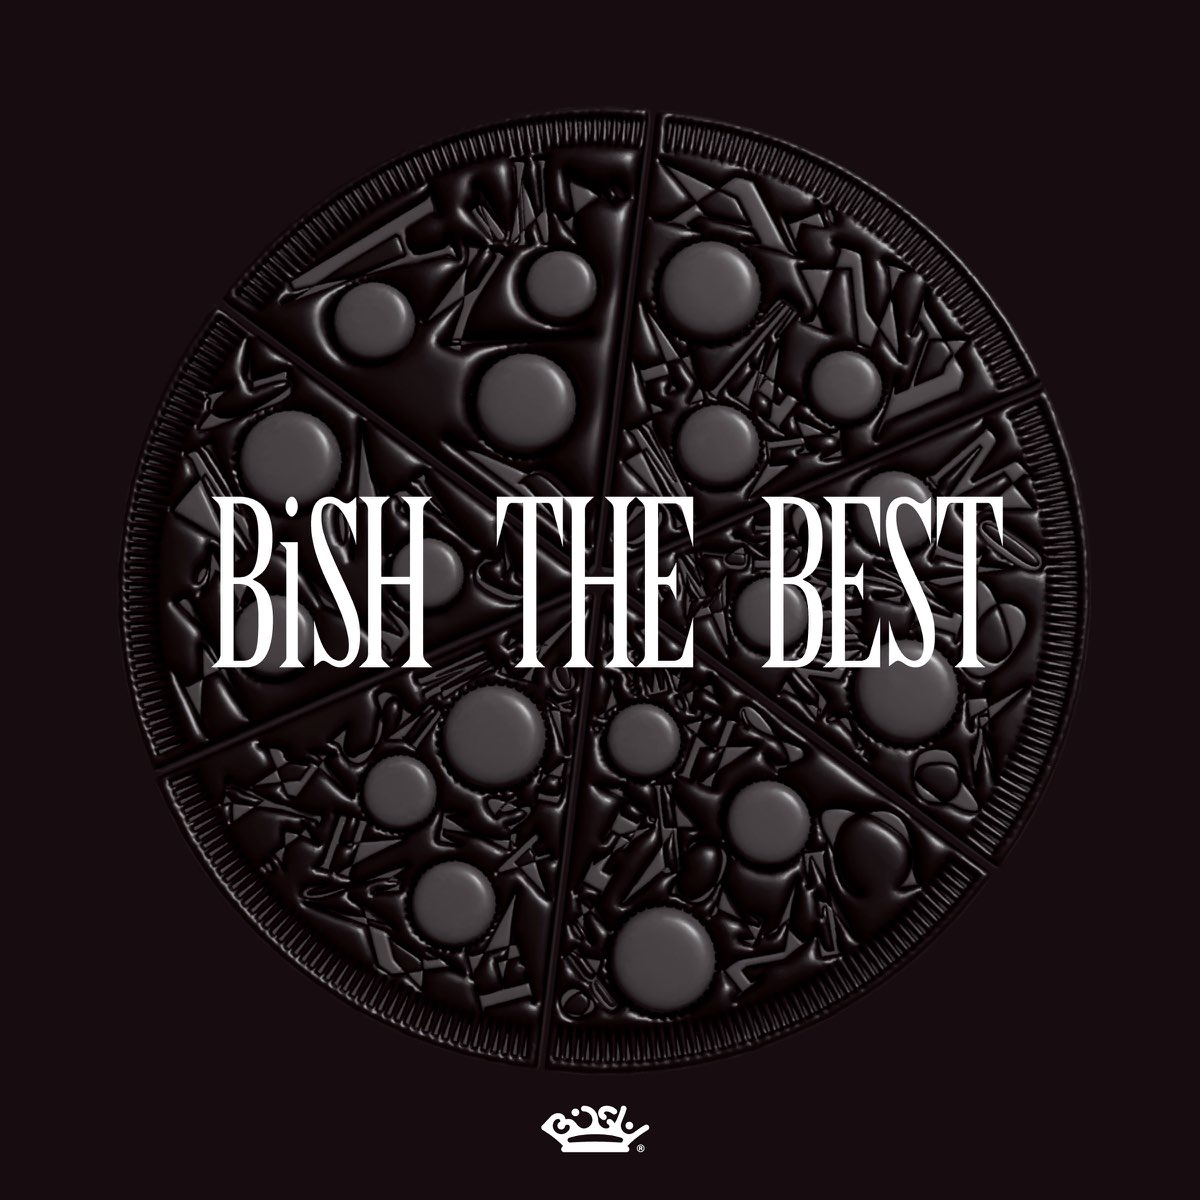 BiSH THE BEST - BiSHのアルバム - Apple Music